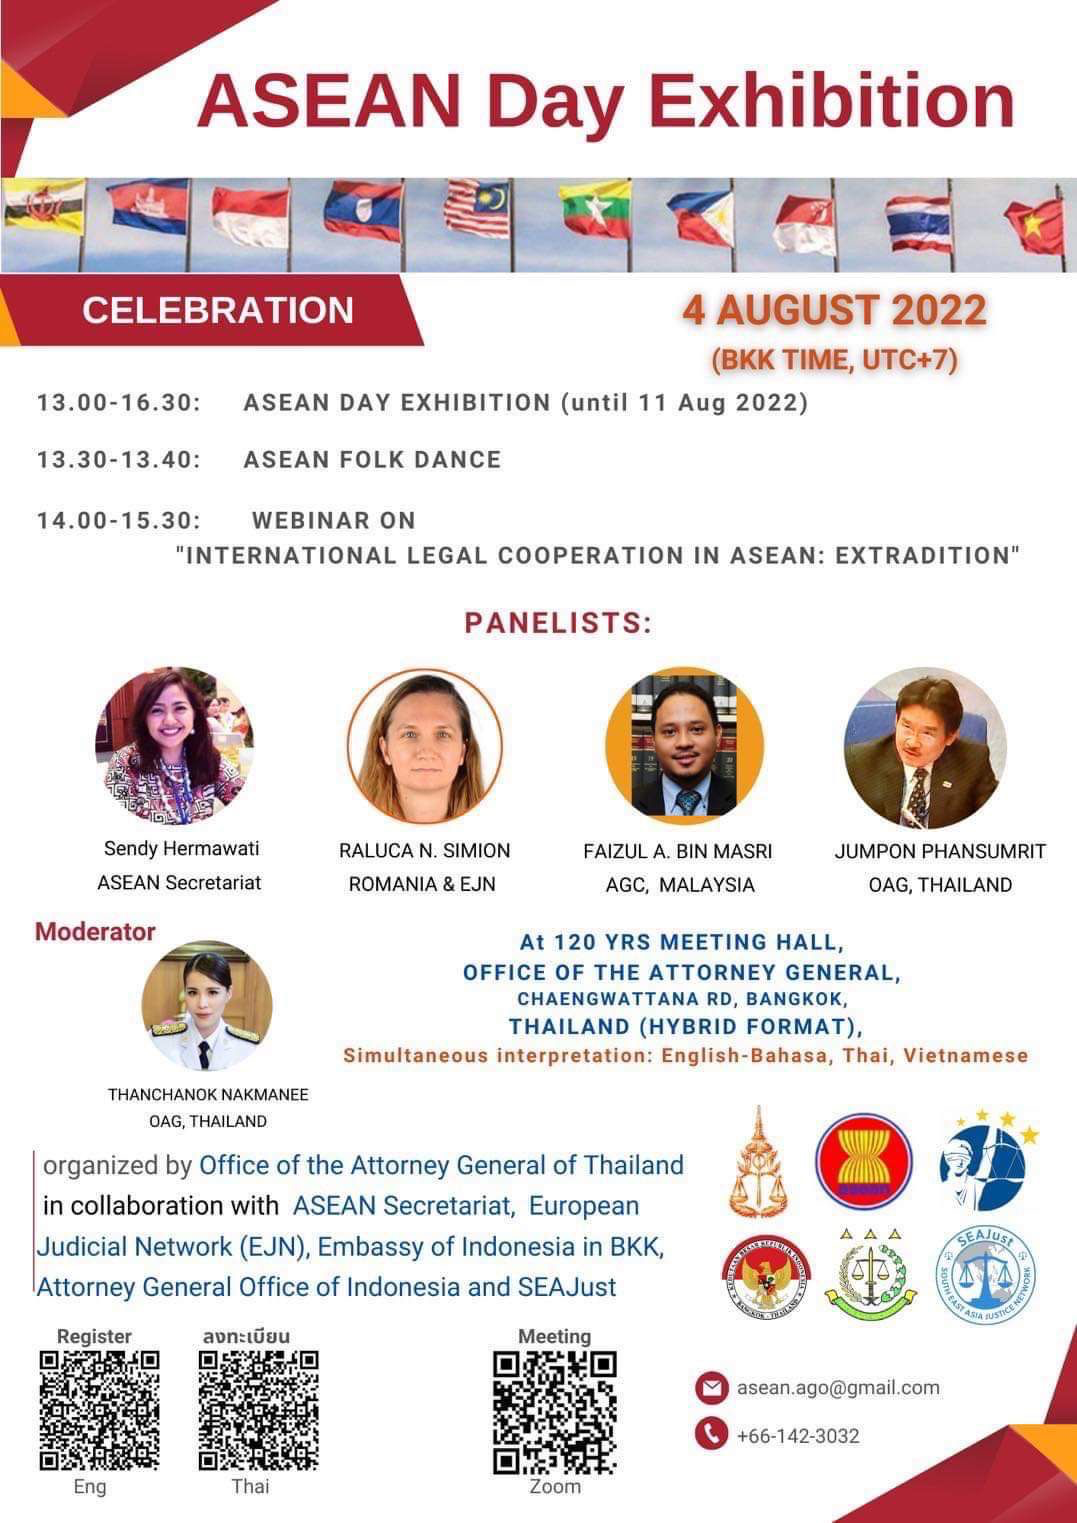 ASEAN Day Exhibition until 11 August – on 4th August 2022 Celebration (BKK time, UTC +7)